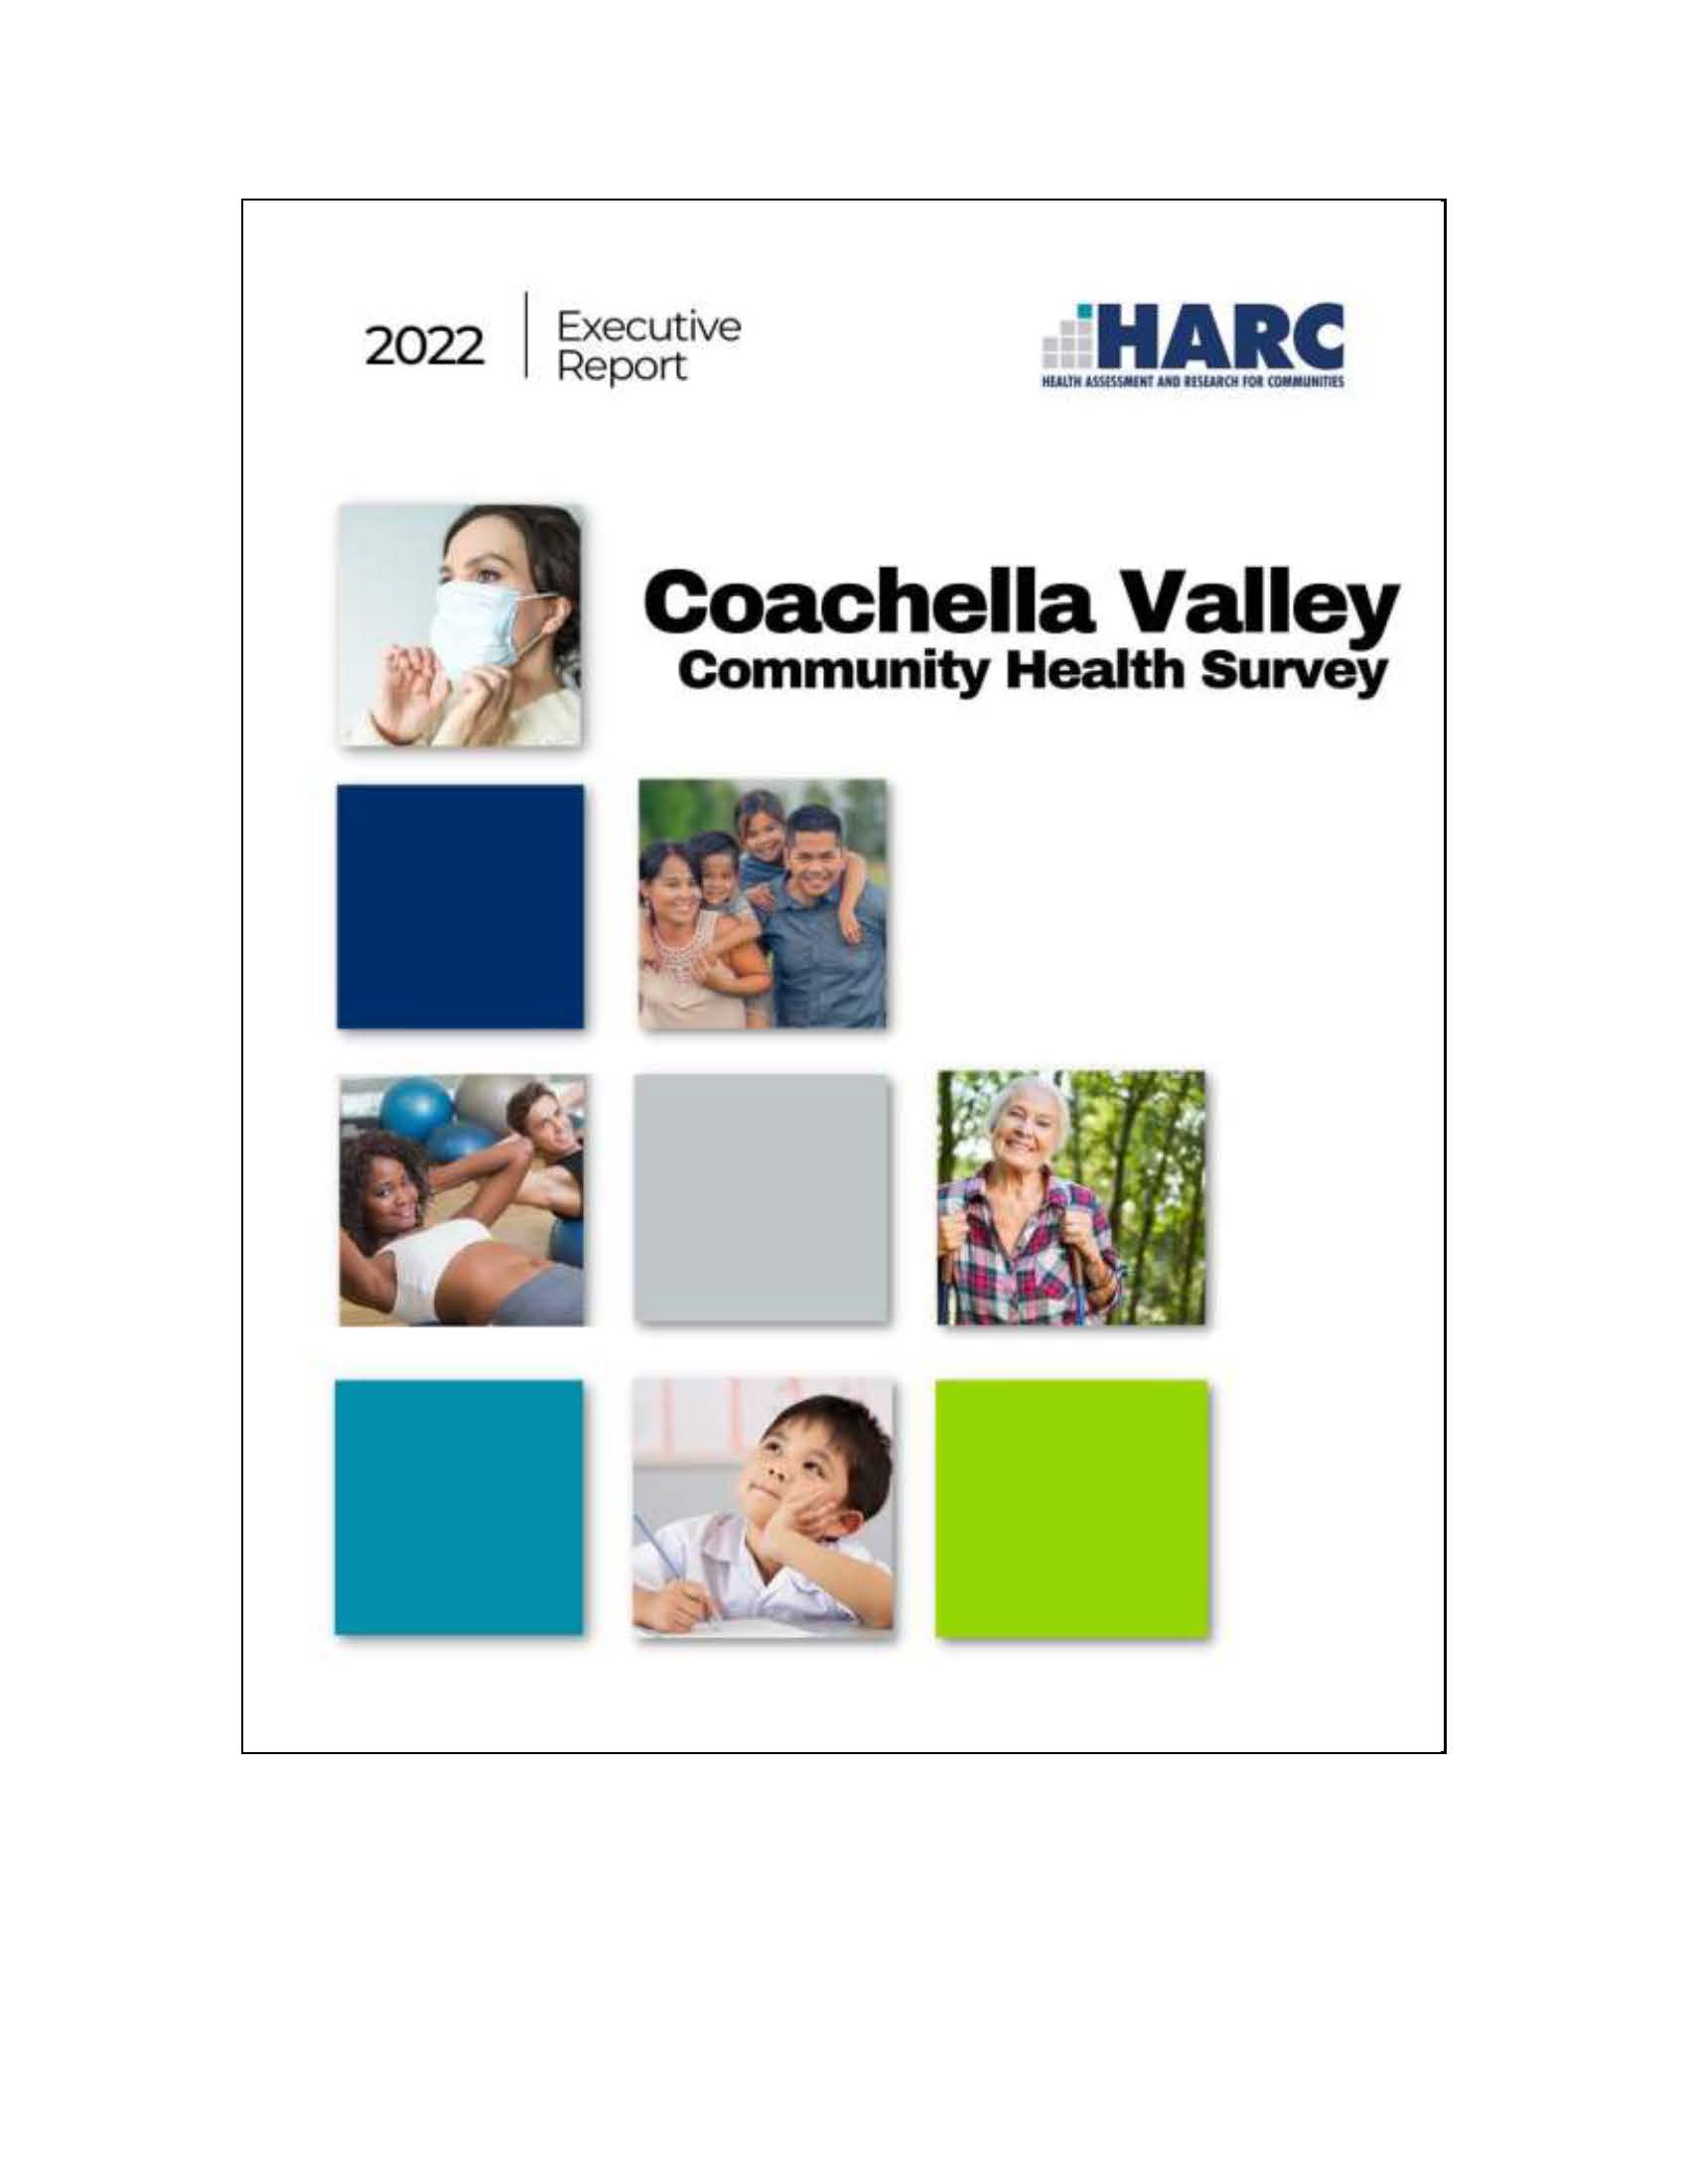 HARC 2022 Coachella Valley Community Health Survey Executive Report cover